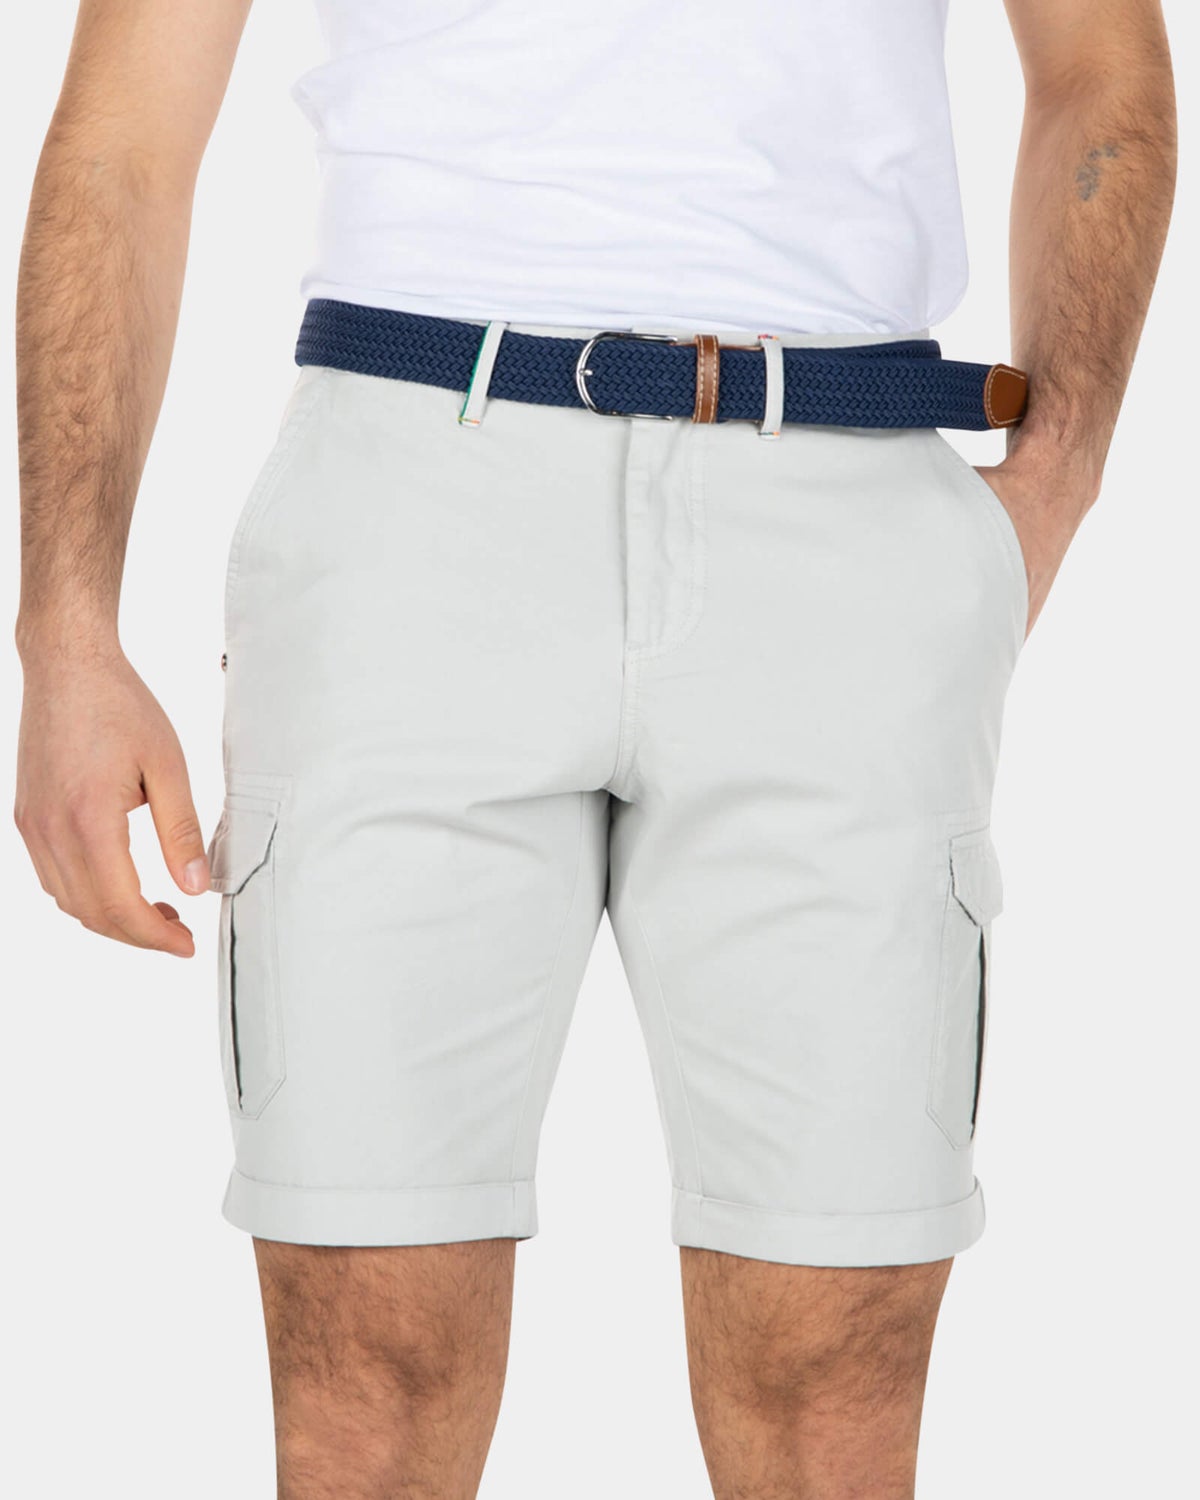 Sturdy cotton cargo shorts